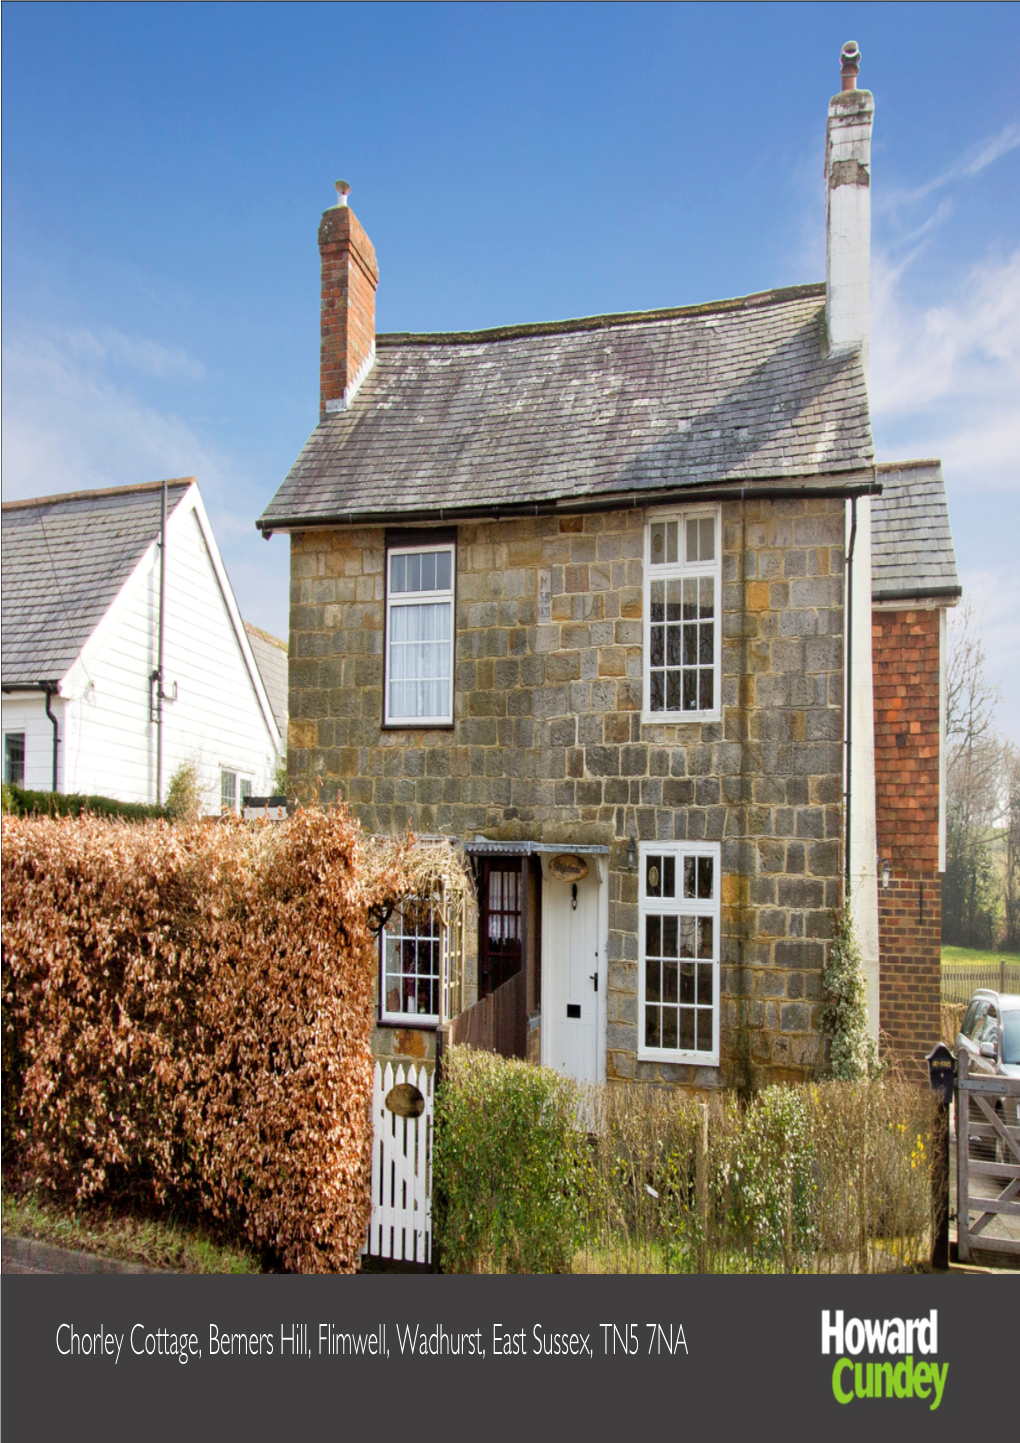 Chorley Cottage, Berners Hill, Flimwell, Wadhurst, East Sussex, TN5 7NA